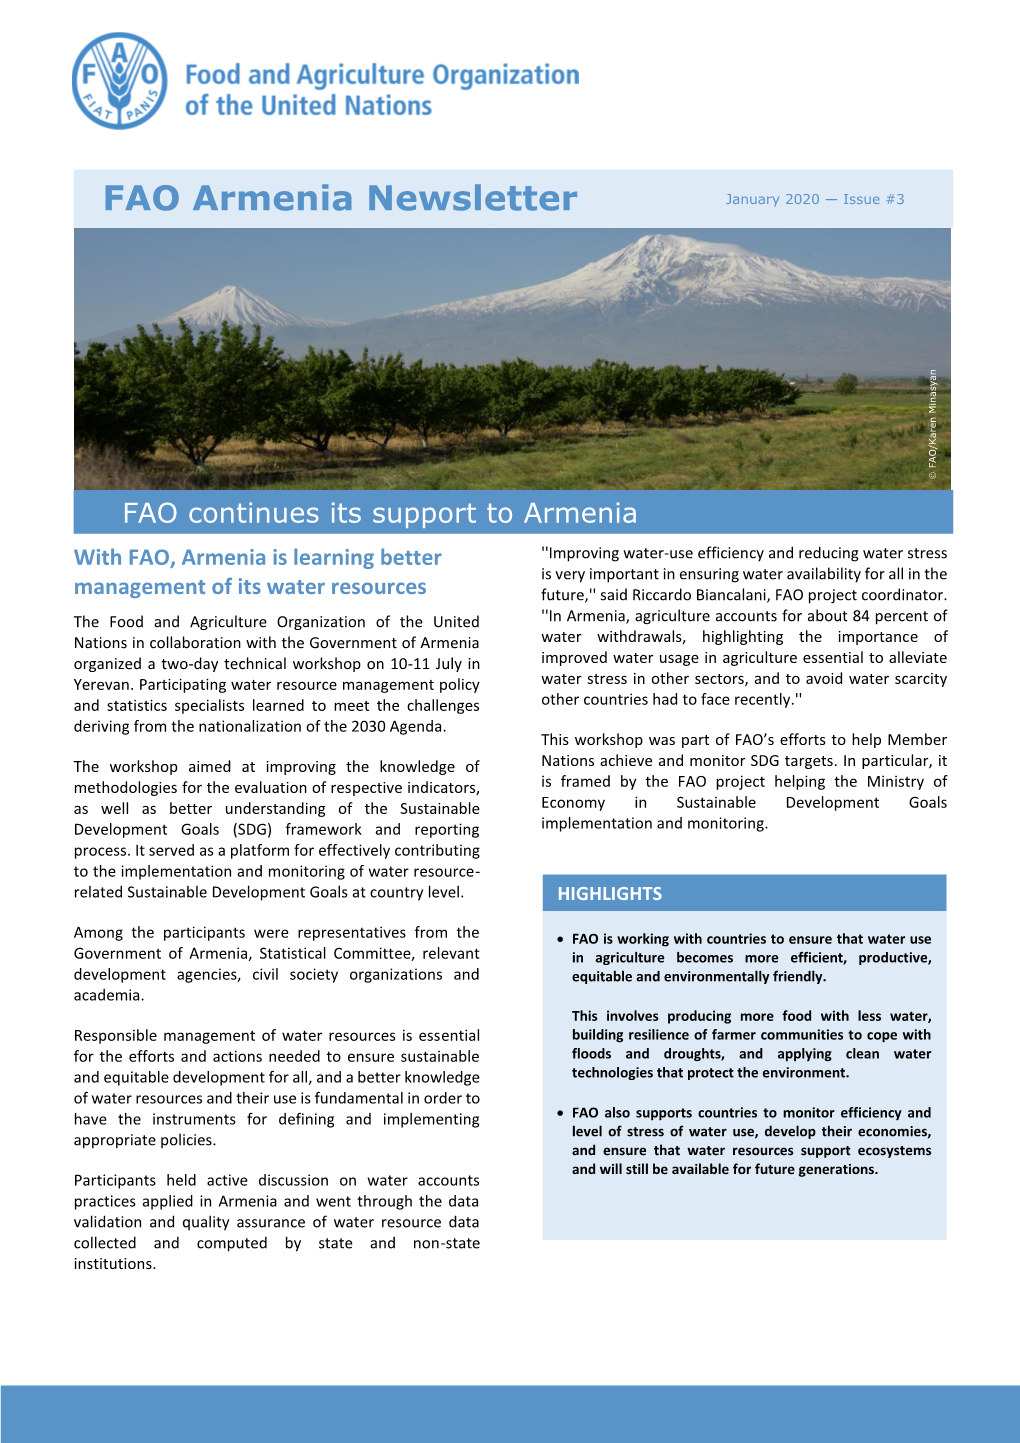 FAO Armenia Newsletter, January 2020